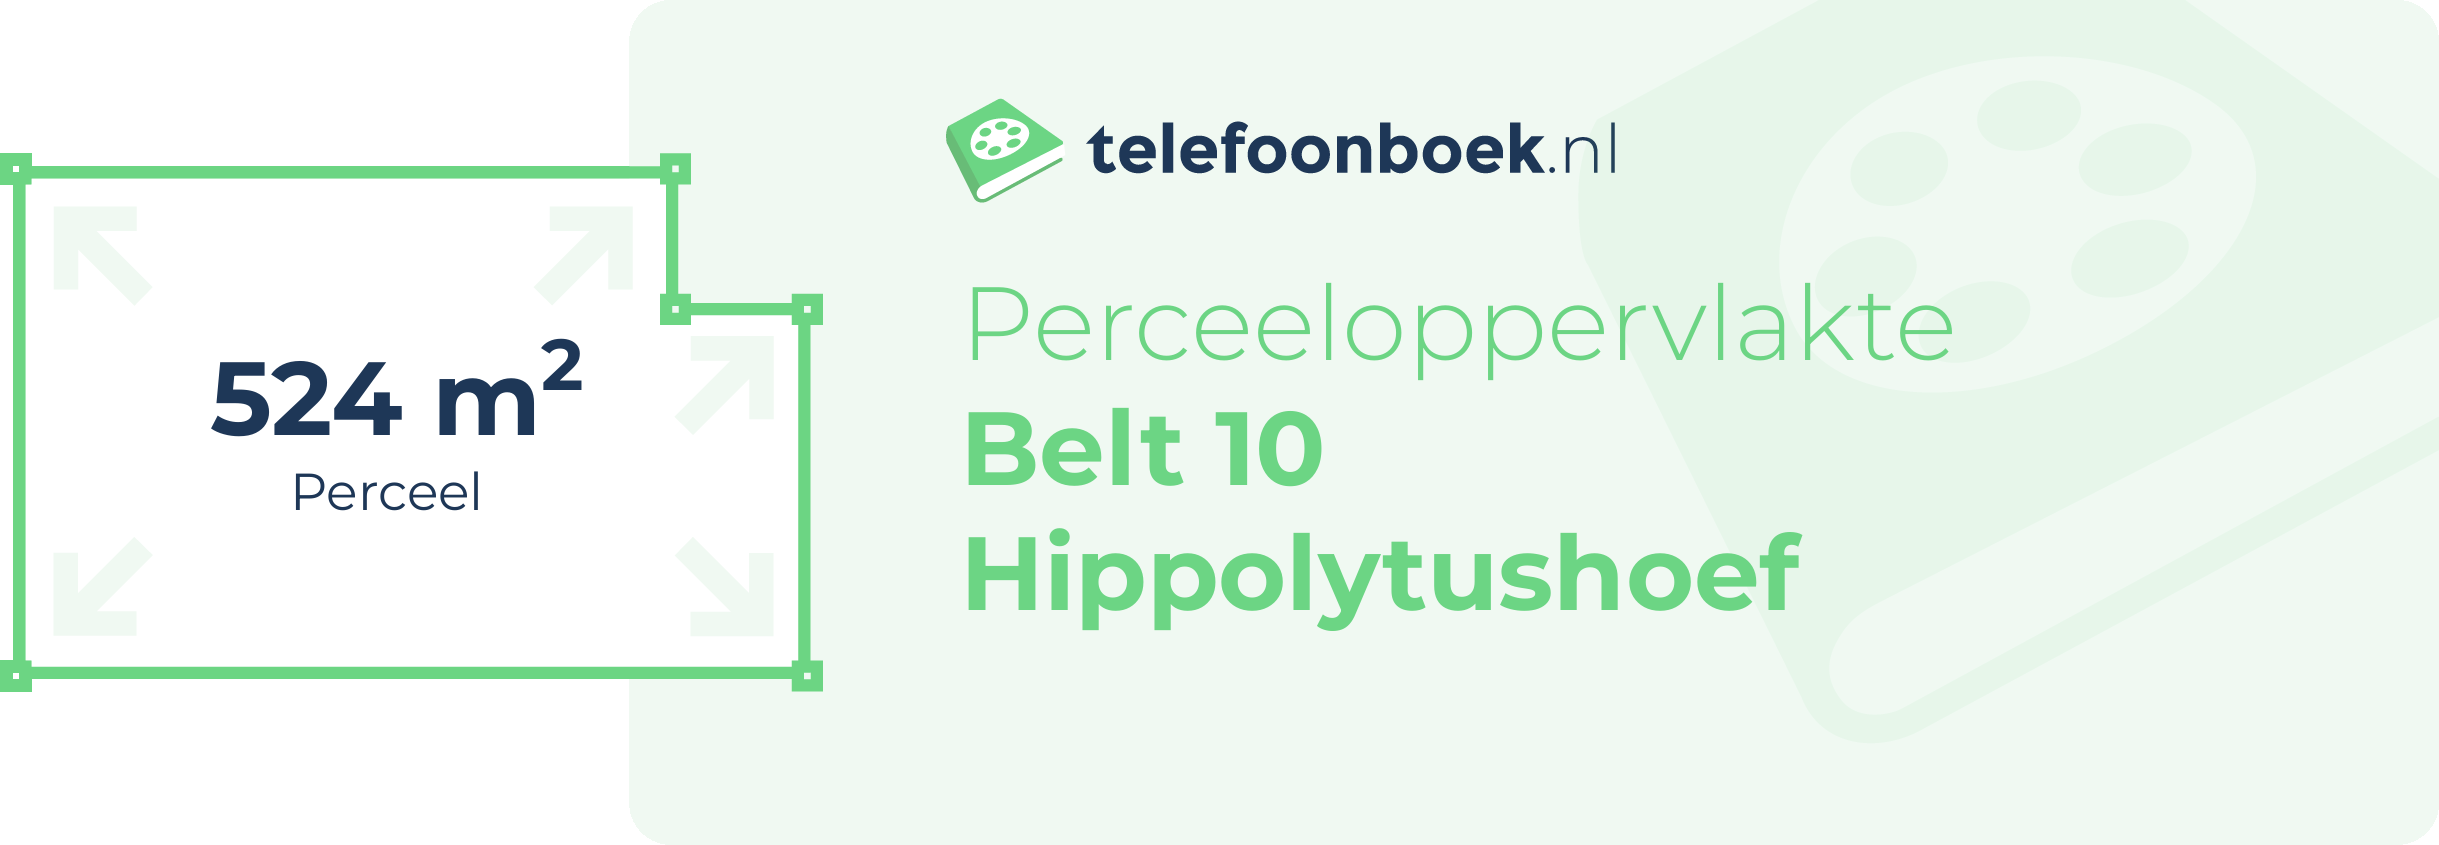 Perceeloppervlakte Belt 10 Hippolytushoef